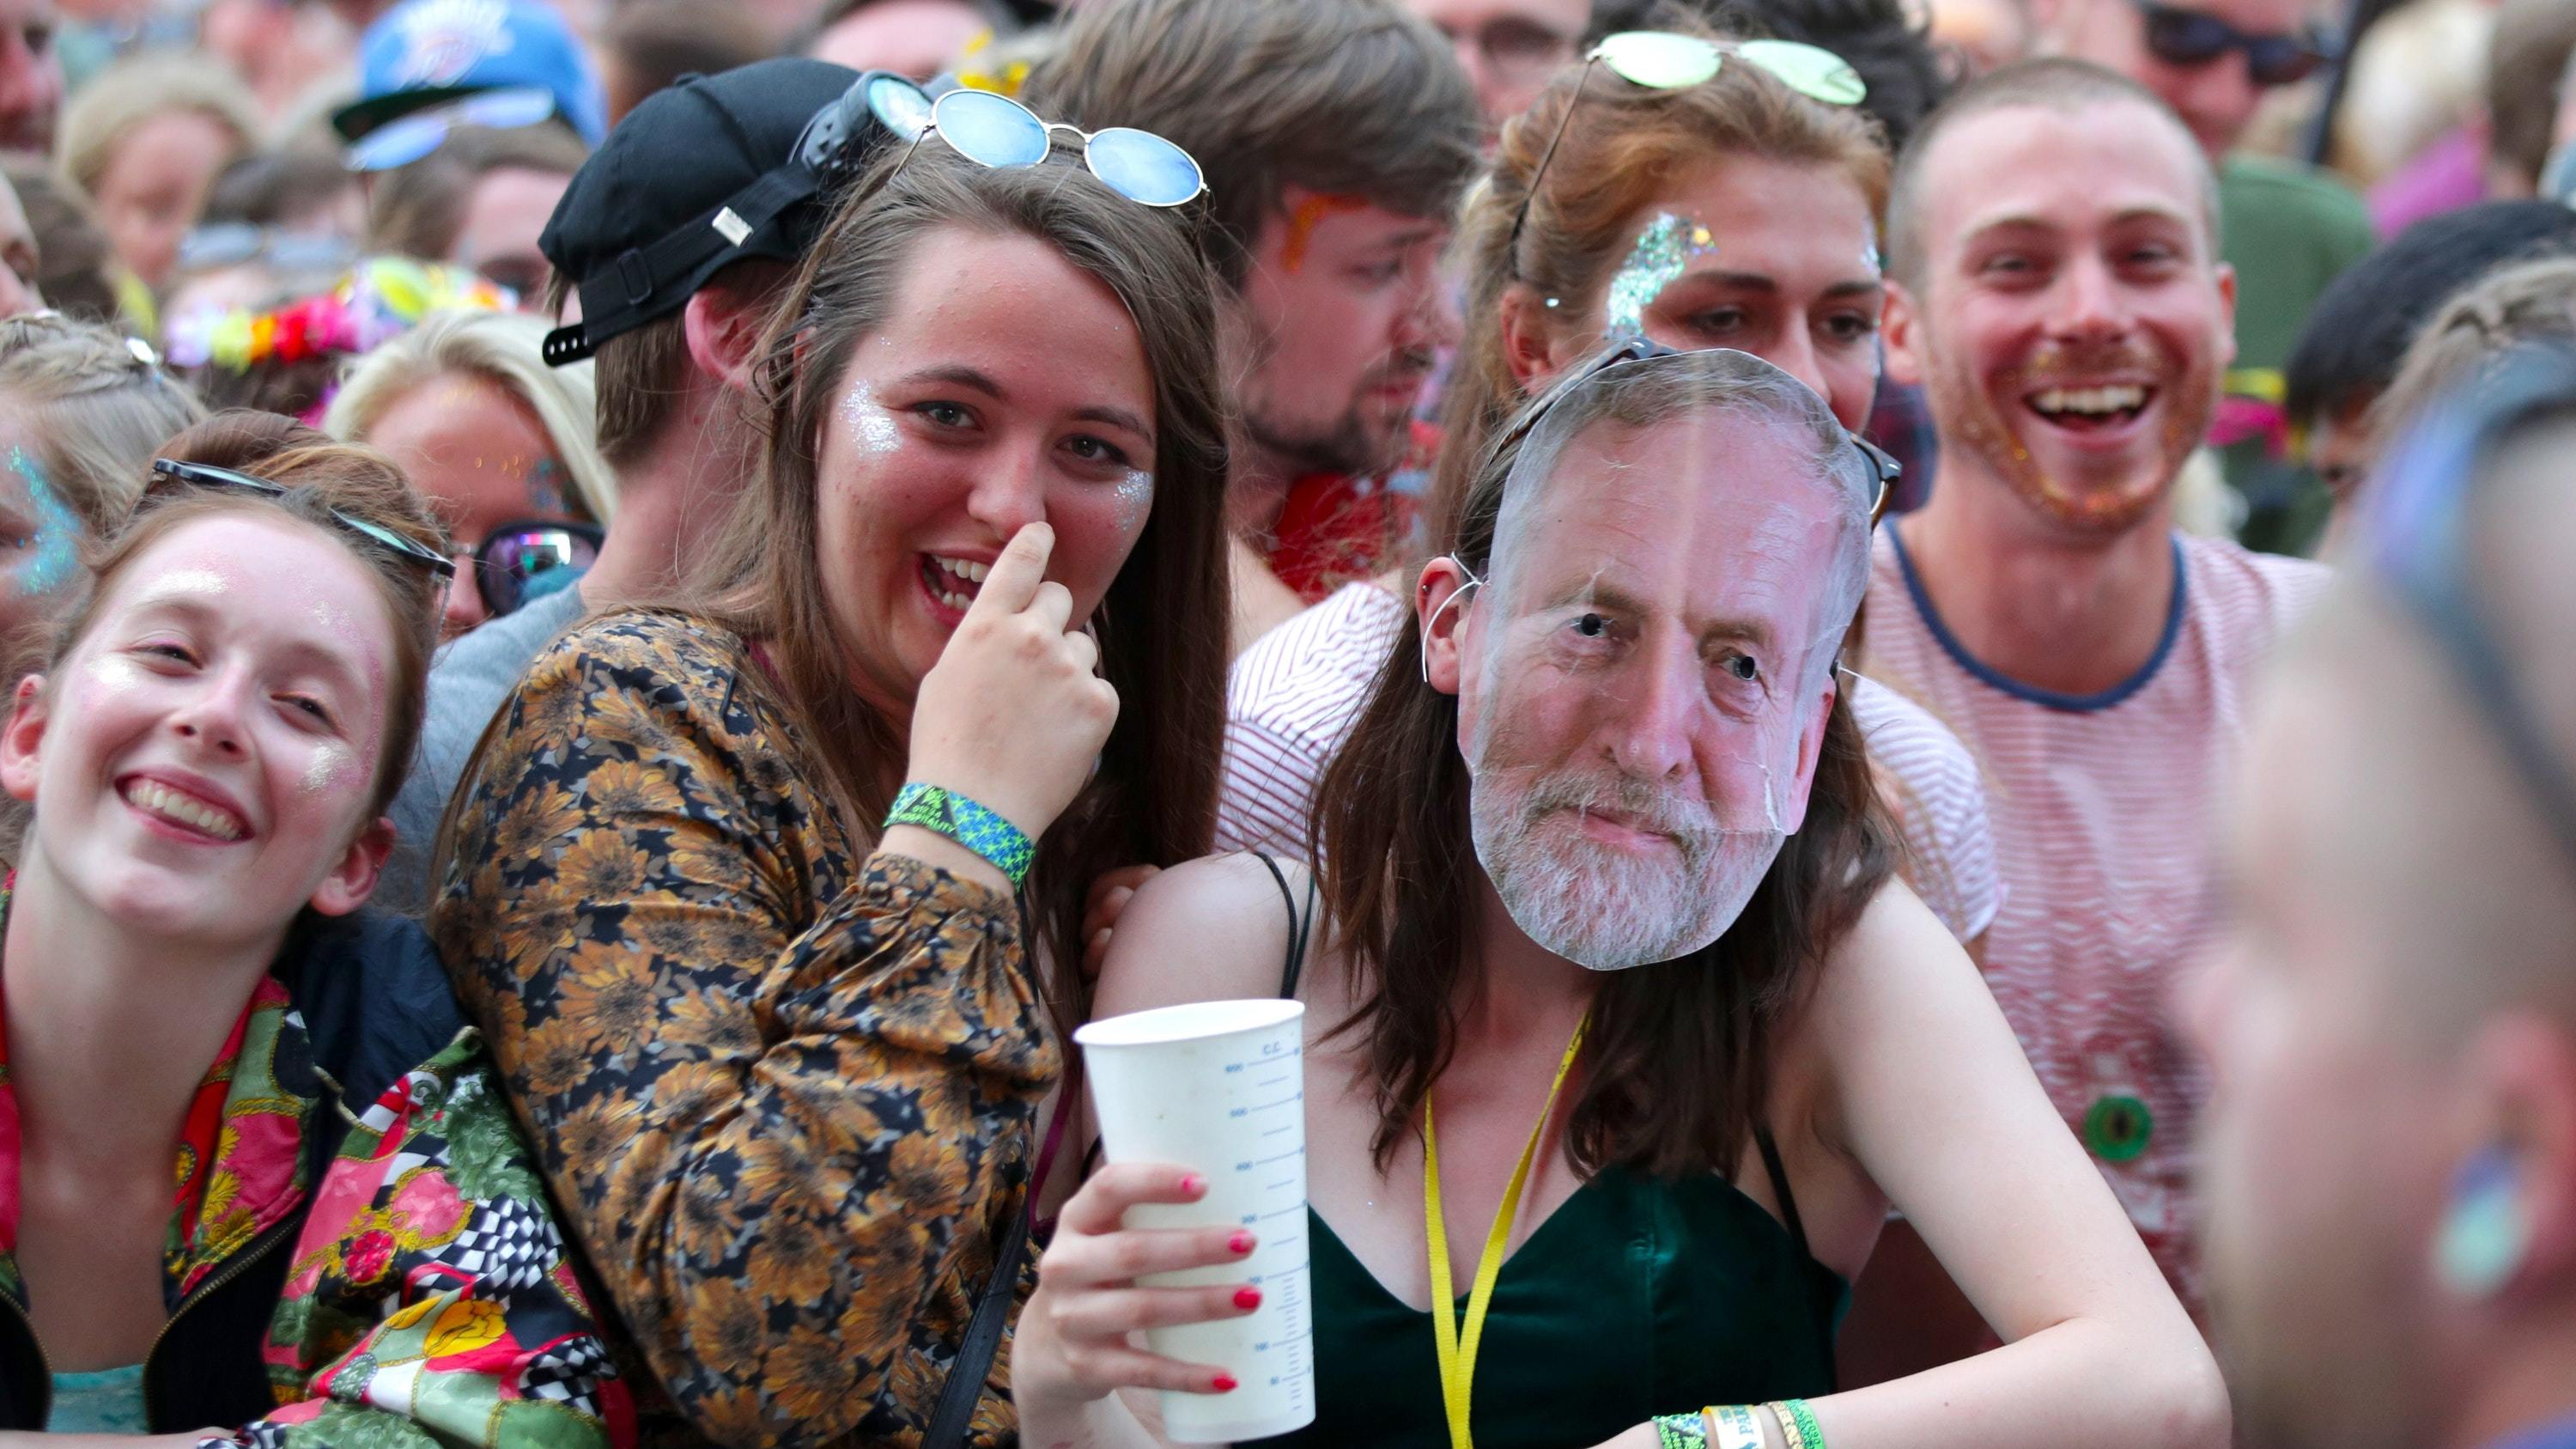 A festivalgoer wearing a Jeremy Corbyn mask at Glastonbury (Yui Mok/PA)